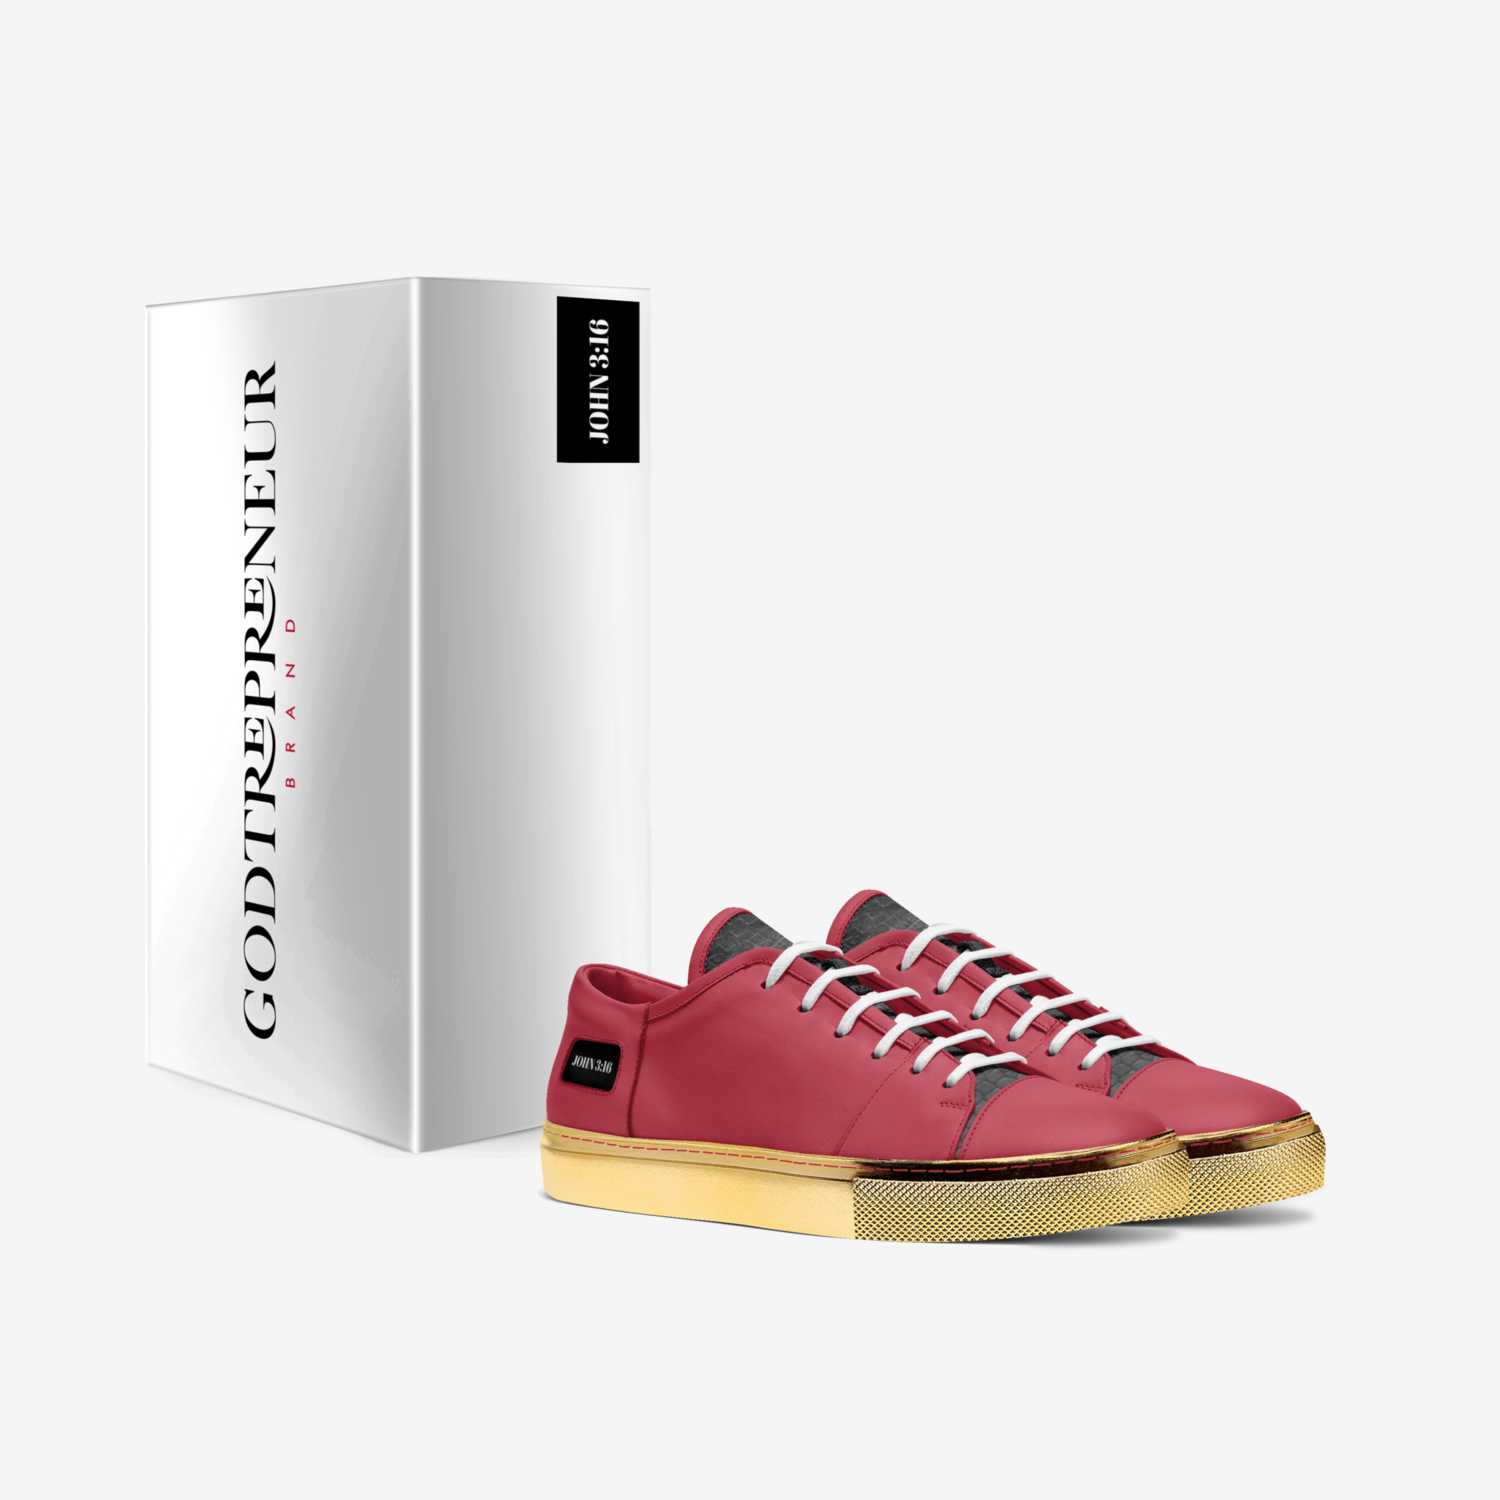 THREESIXTEEN custom made in Italy shoes by Jon Clash | Box view